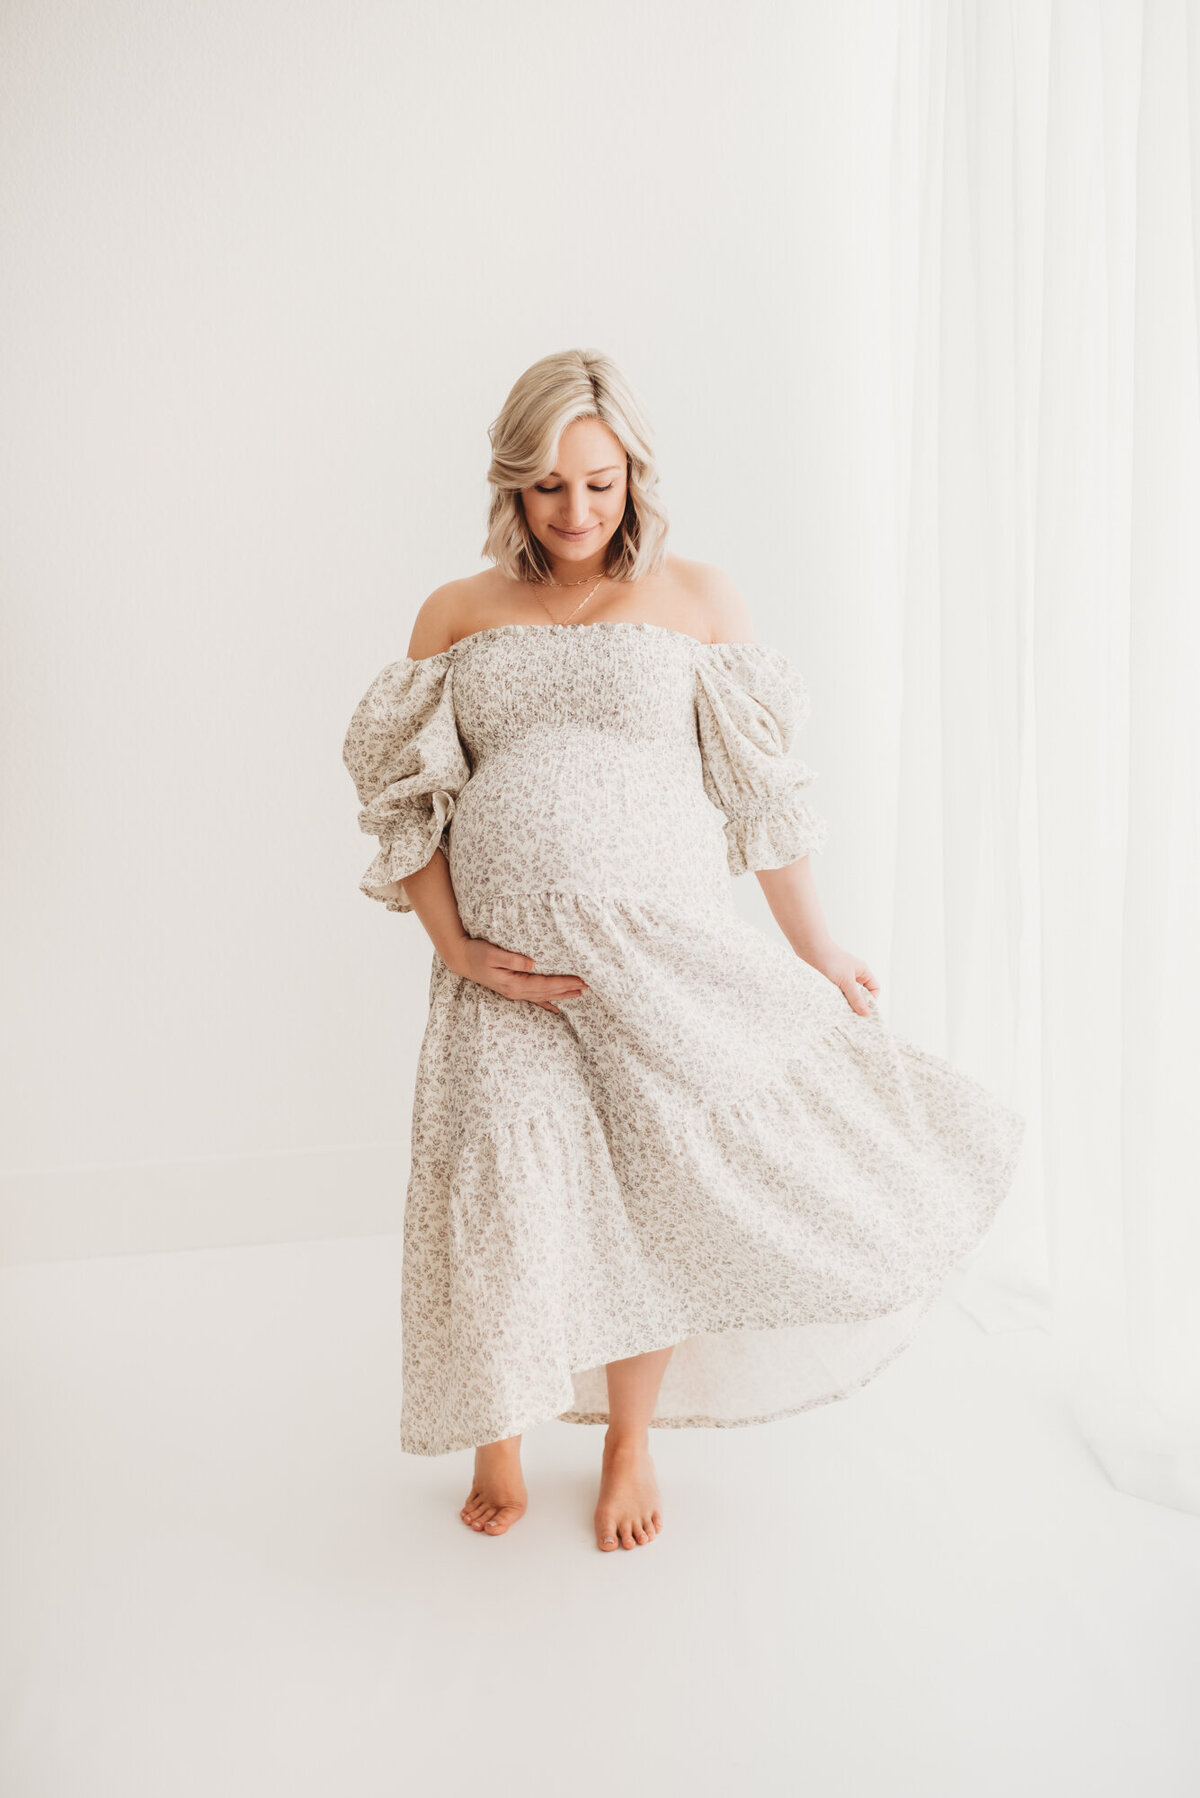 pregnant woman swishing her dress in white studio photo room